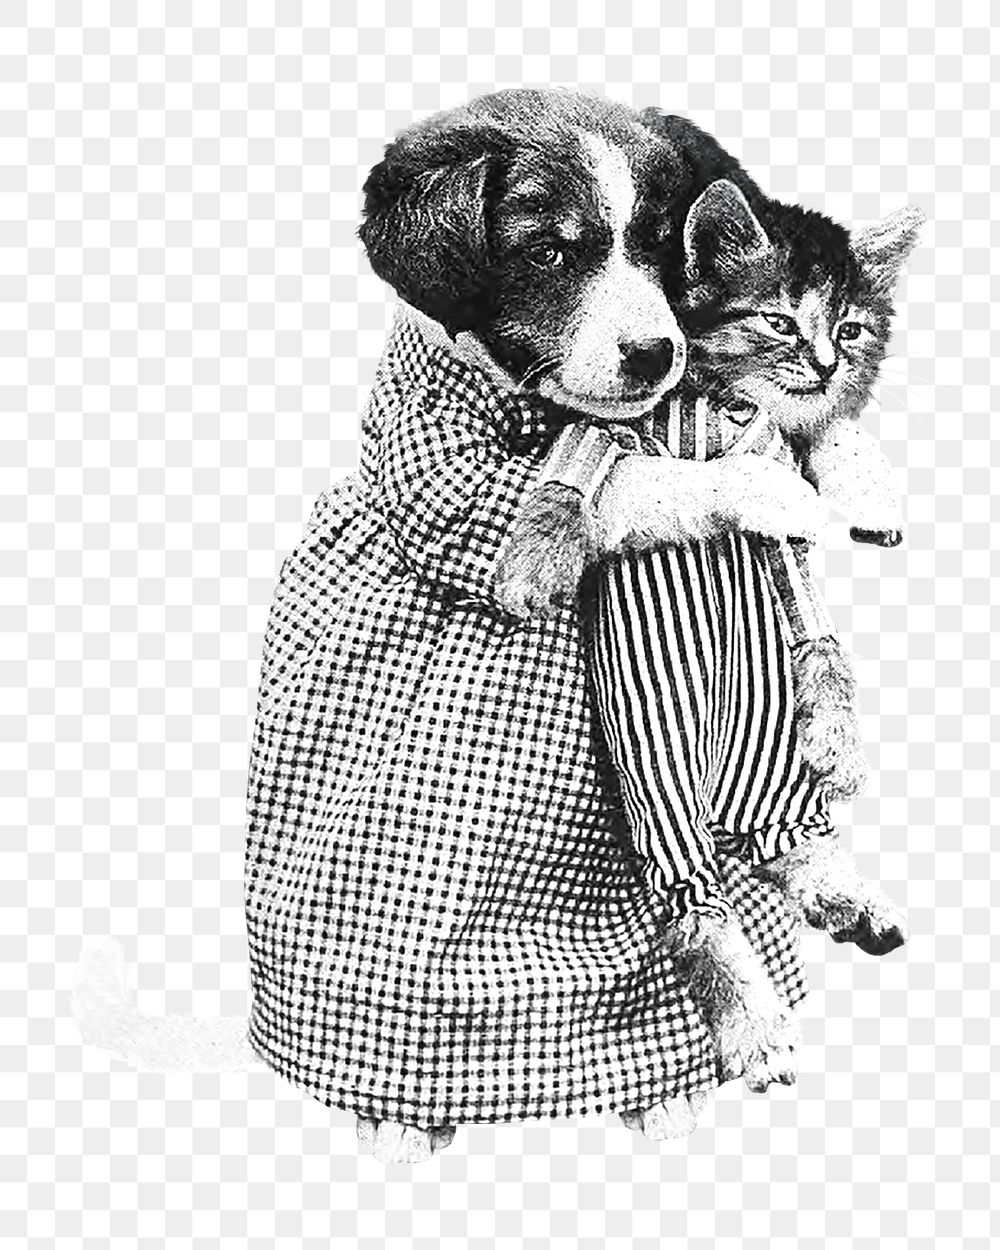 Dog hugging cat png vintage illustration, transparent background. Remixed by rawpixel. 